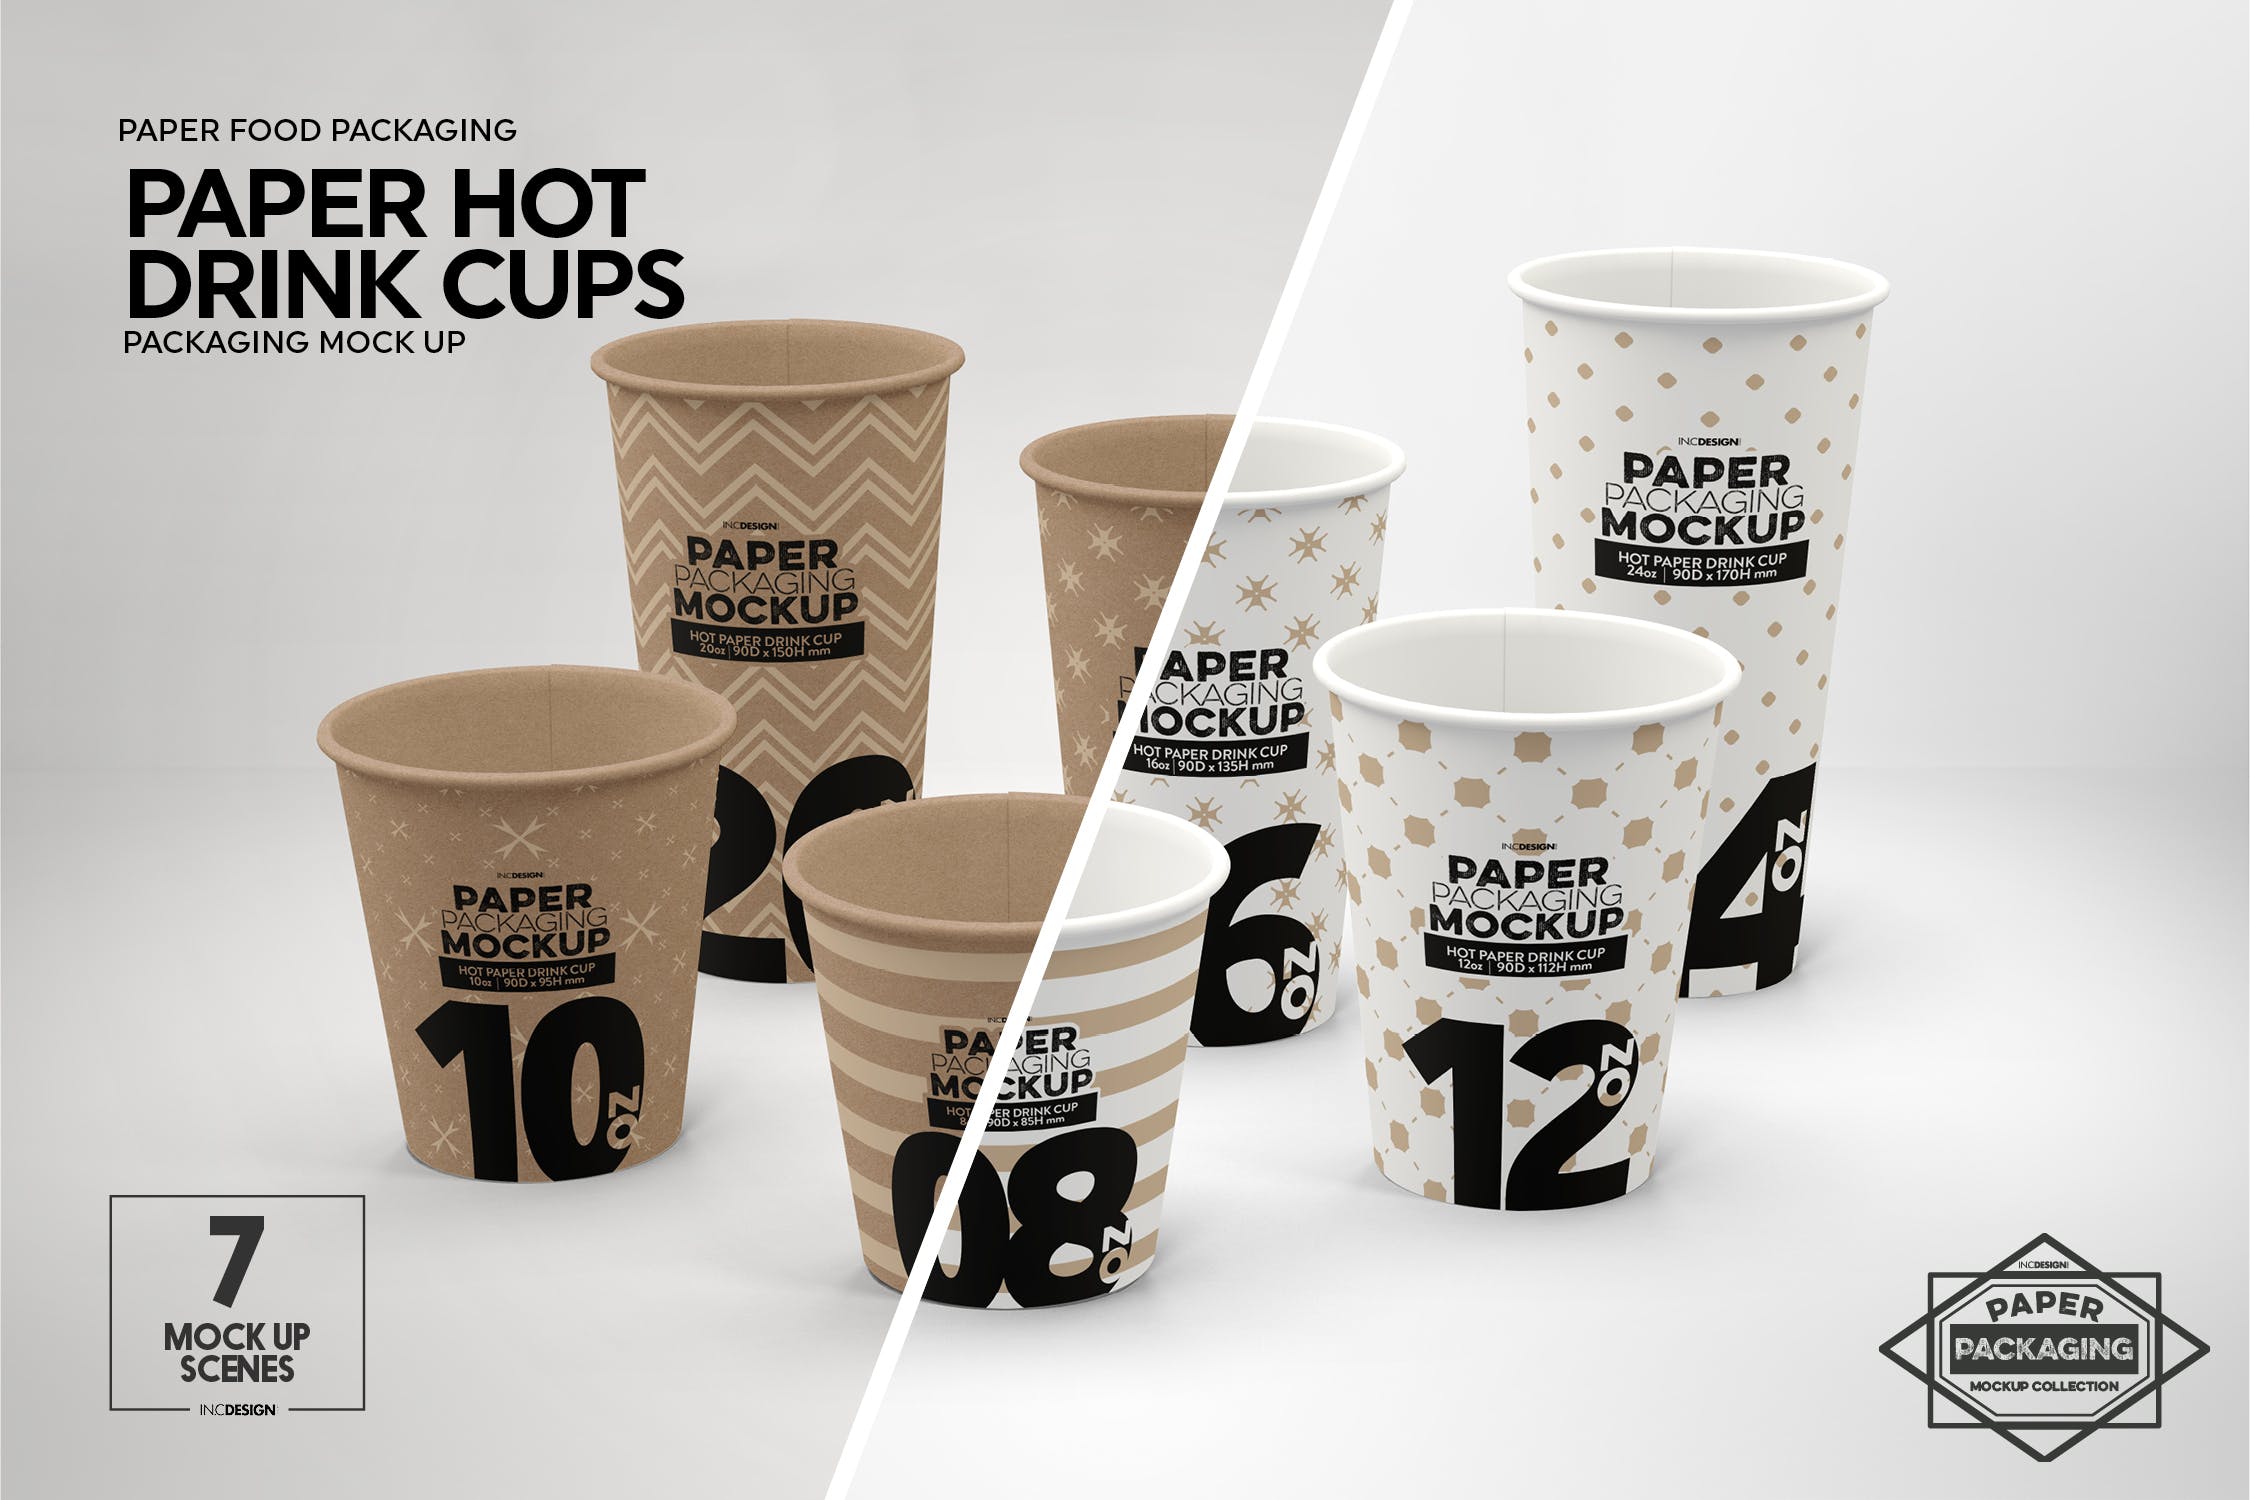 热饮一次性纸杯外观设计16图库精选 Paper Hot Drink Cups Packaging Mockup插图(2)